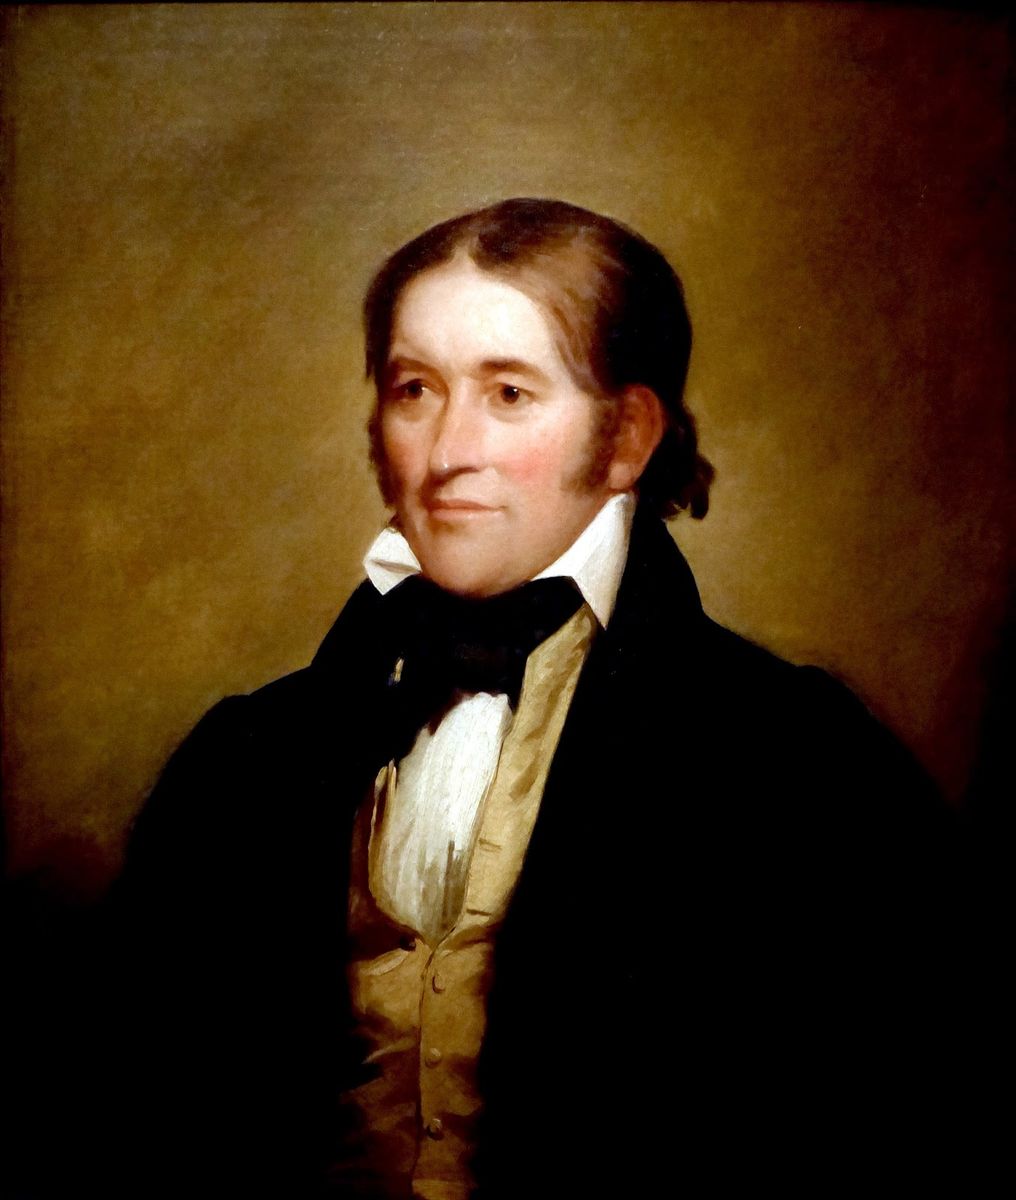 The Portrait Gallery: Davy Crockett